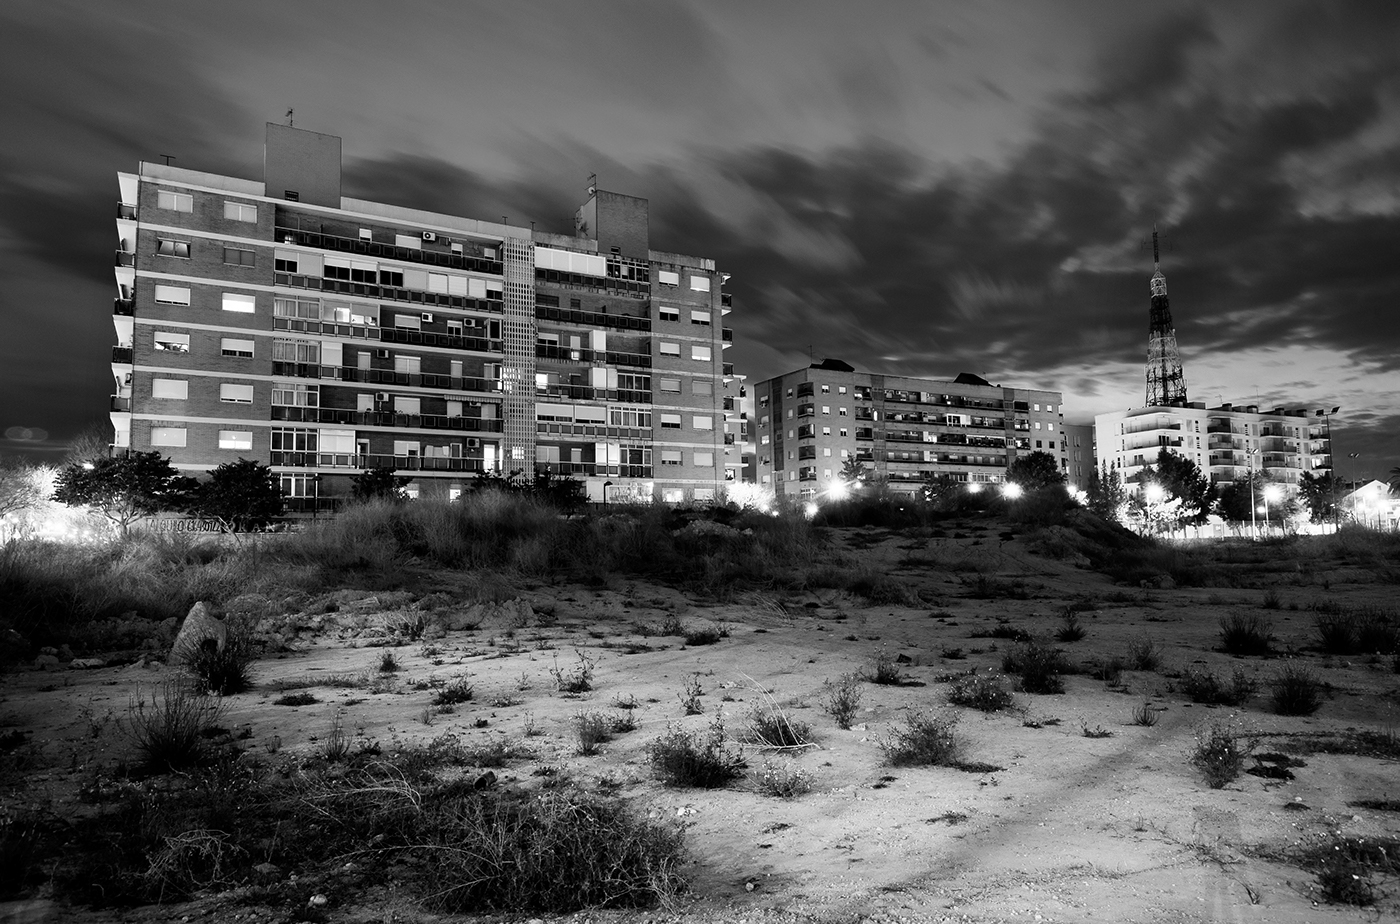 valencia vlc spain españa easd arquitectura Fotografia blancoynegro monochrome Picture ciudad paisaje city scenery Landscape